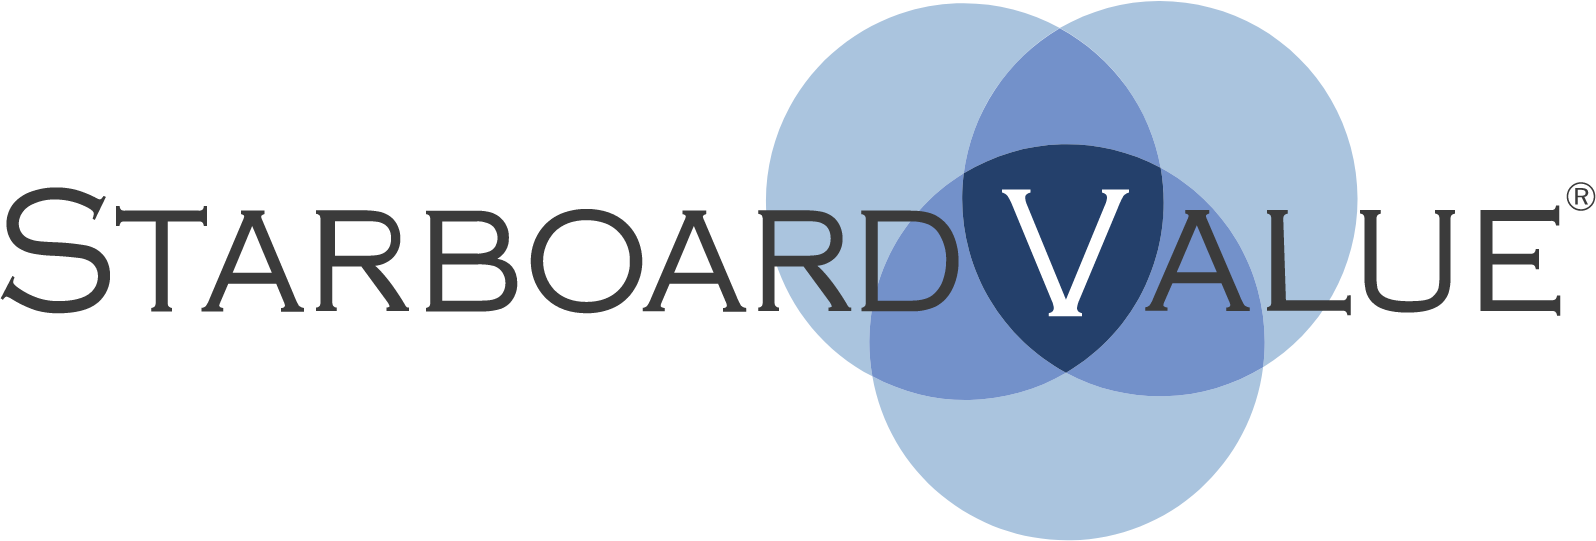 Starboard Investment Trust logo large (transparent PNG)